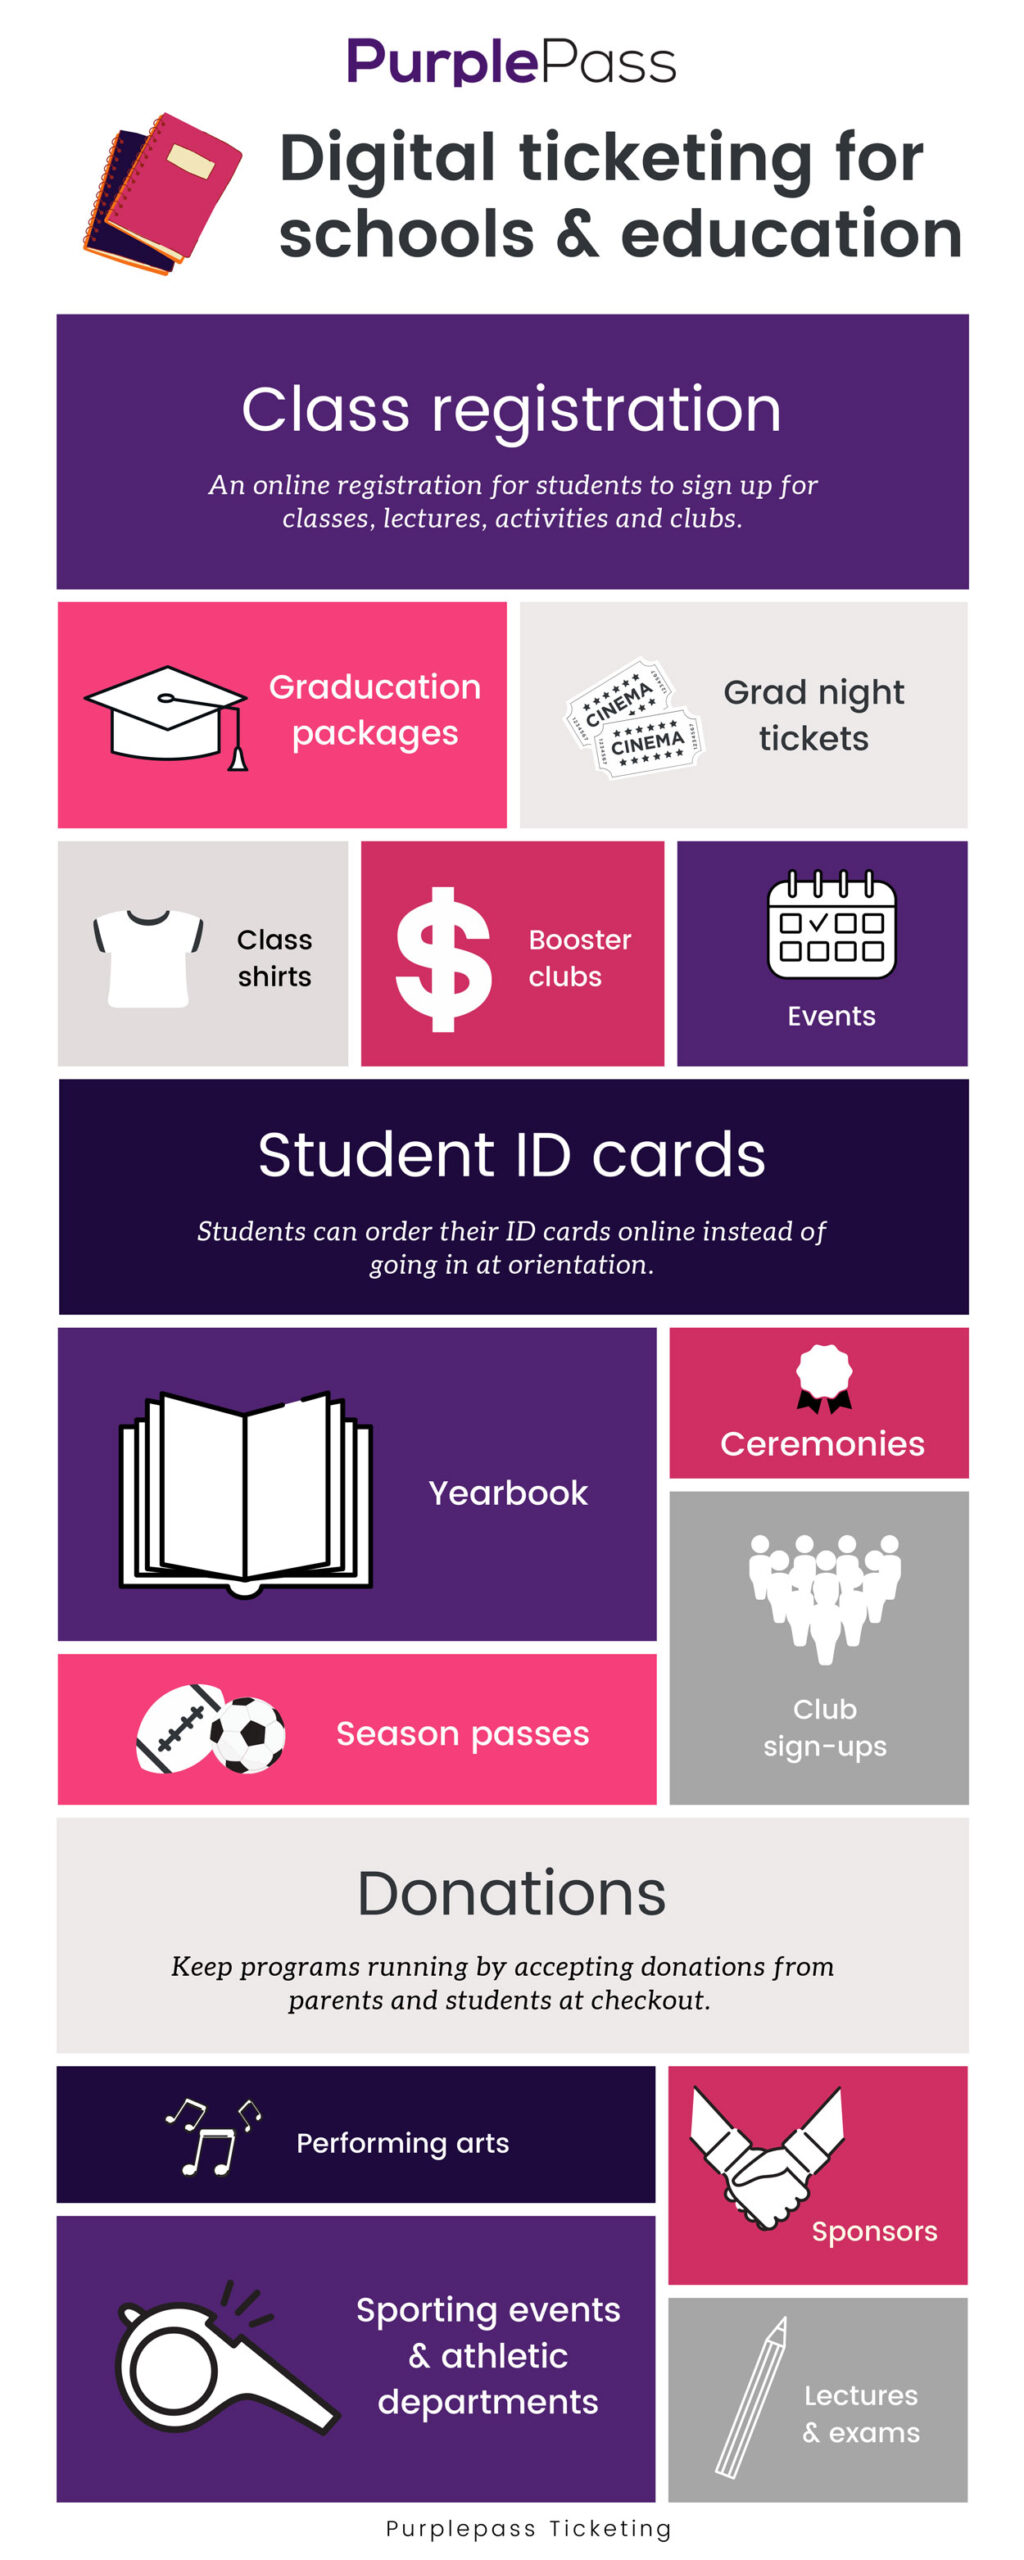 Purplepass infographic for schools using digital ticketing